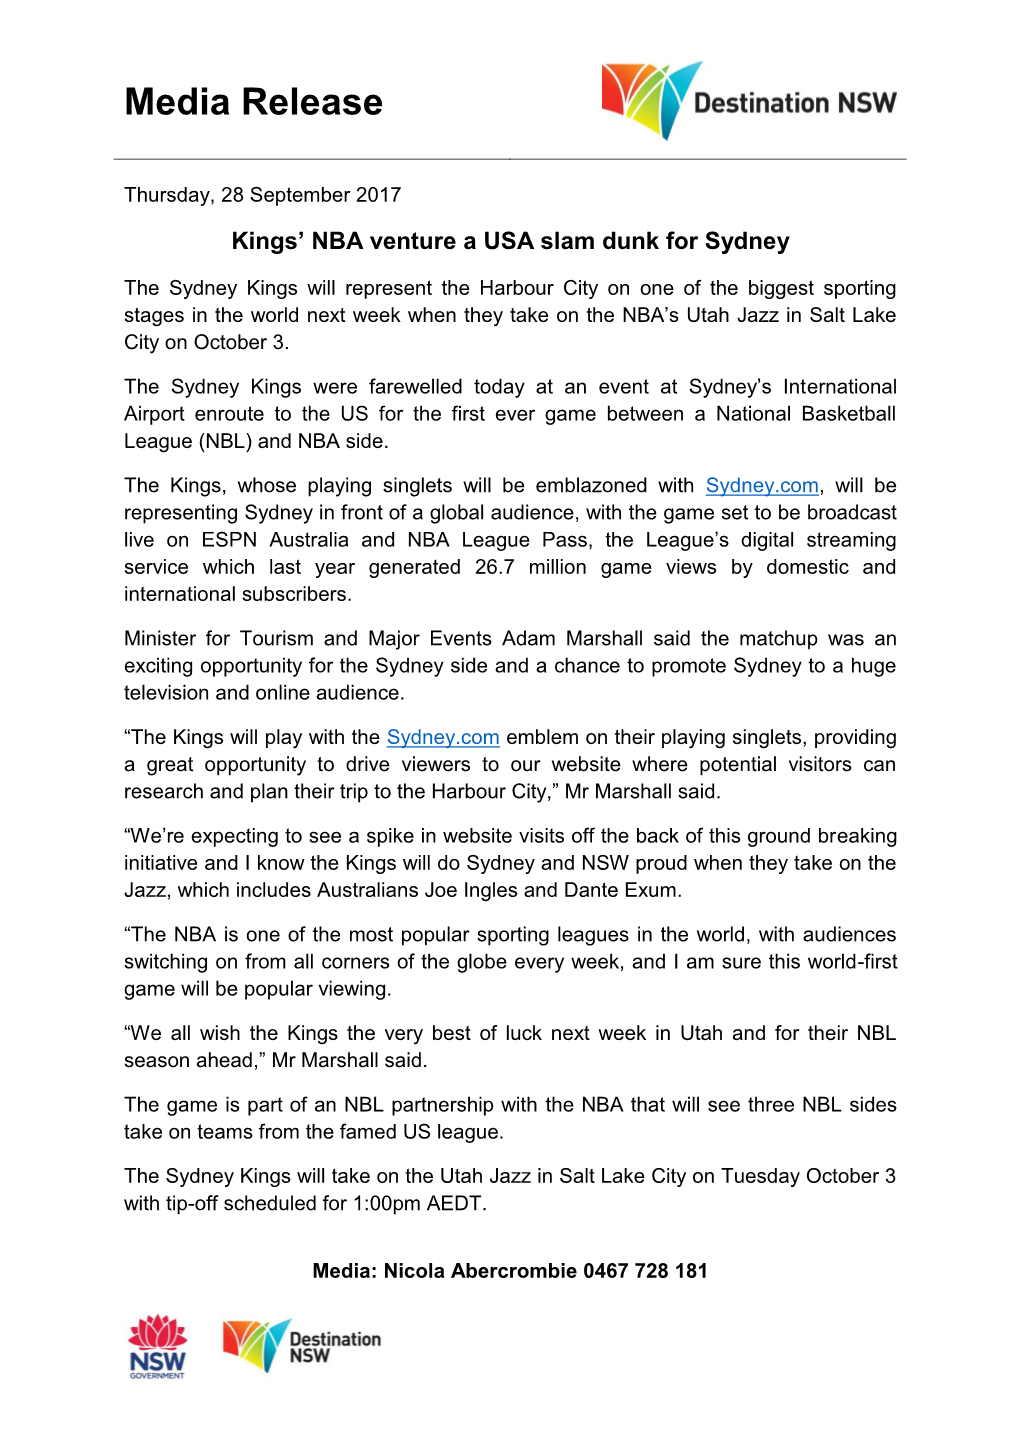 Kings' NBA Venture a USA Slam Dunk for Sydney